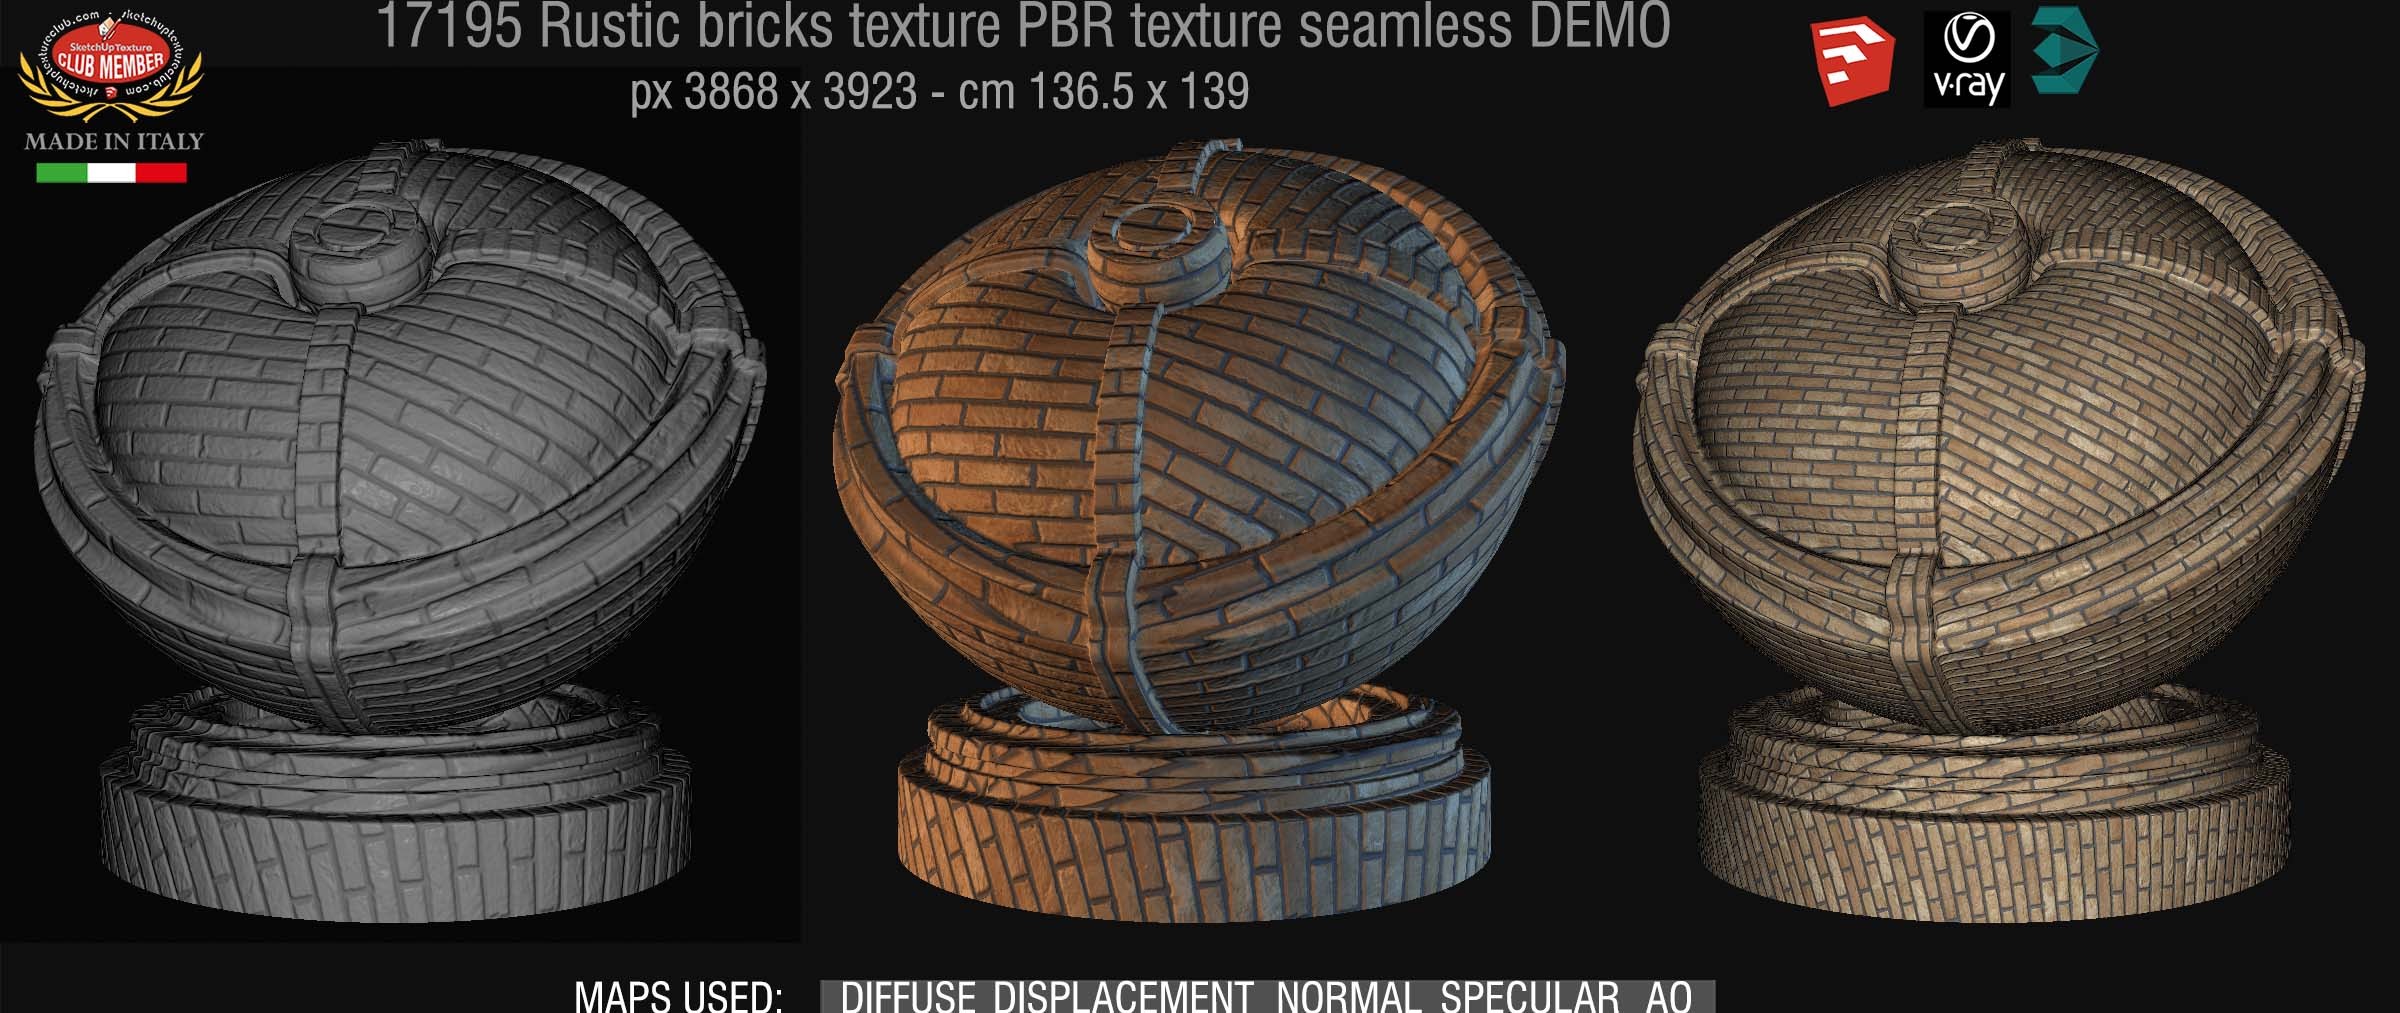 17195 rustic bricks PBR texture seamless DEMO